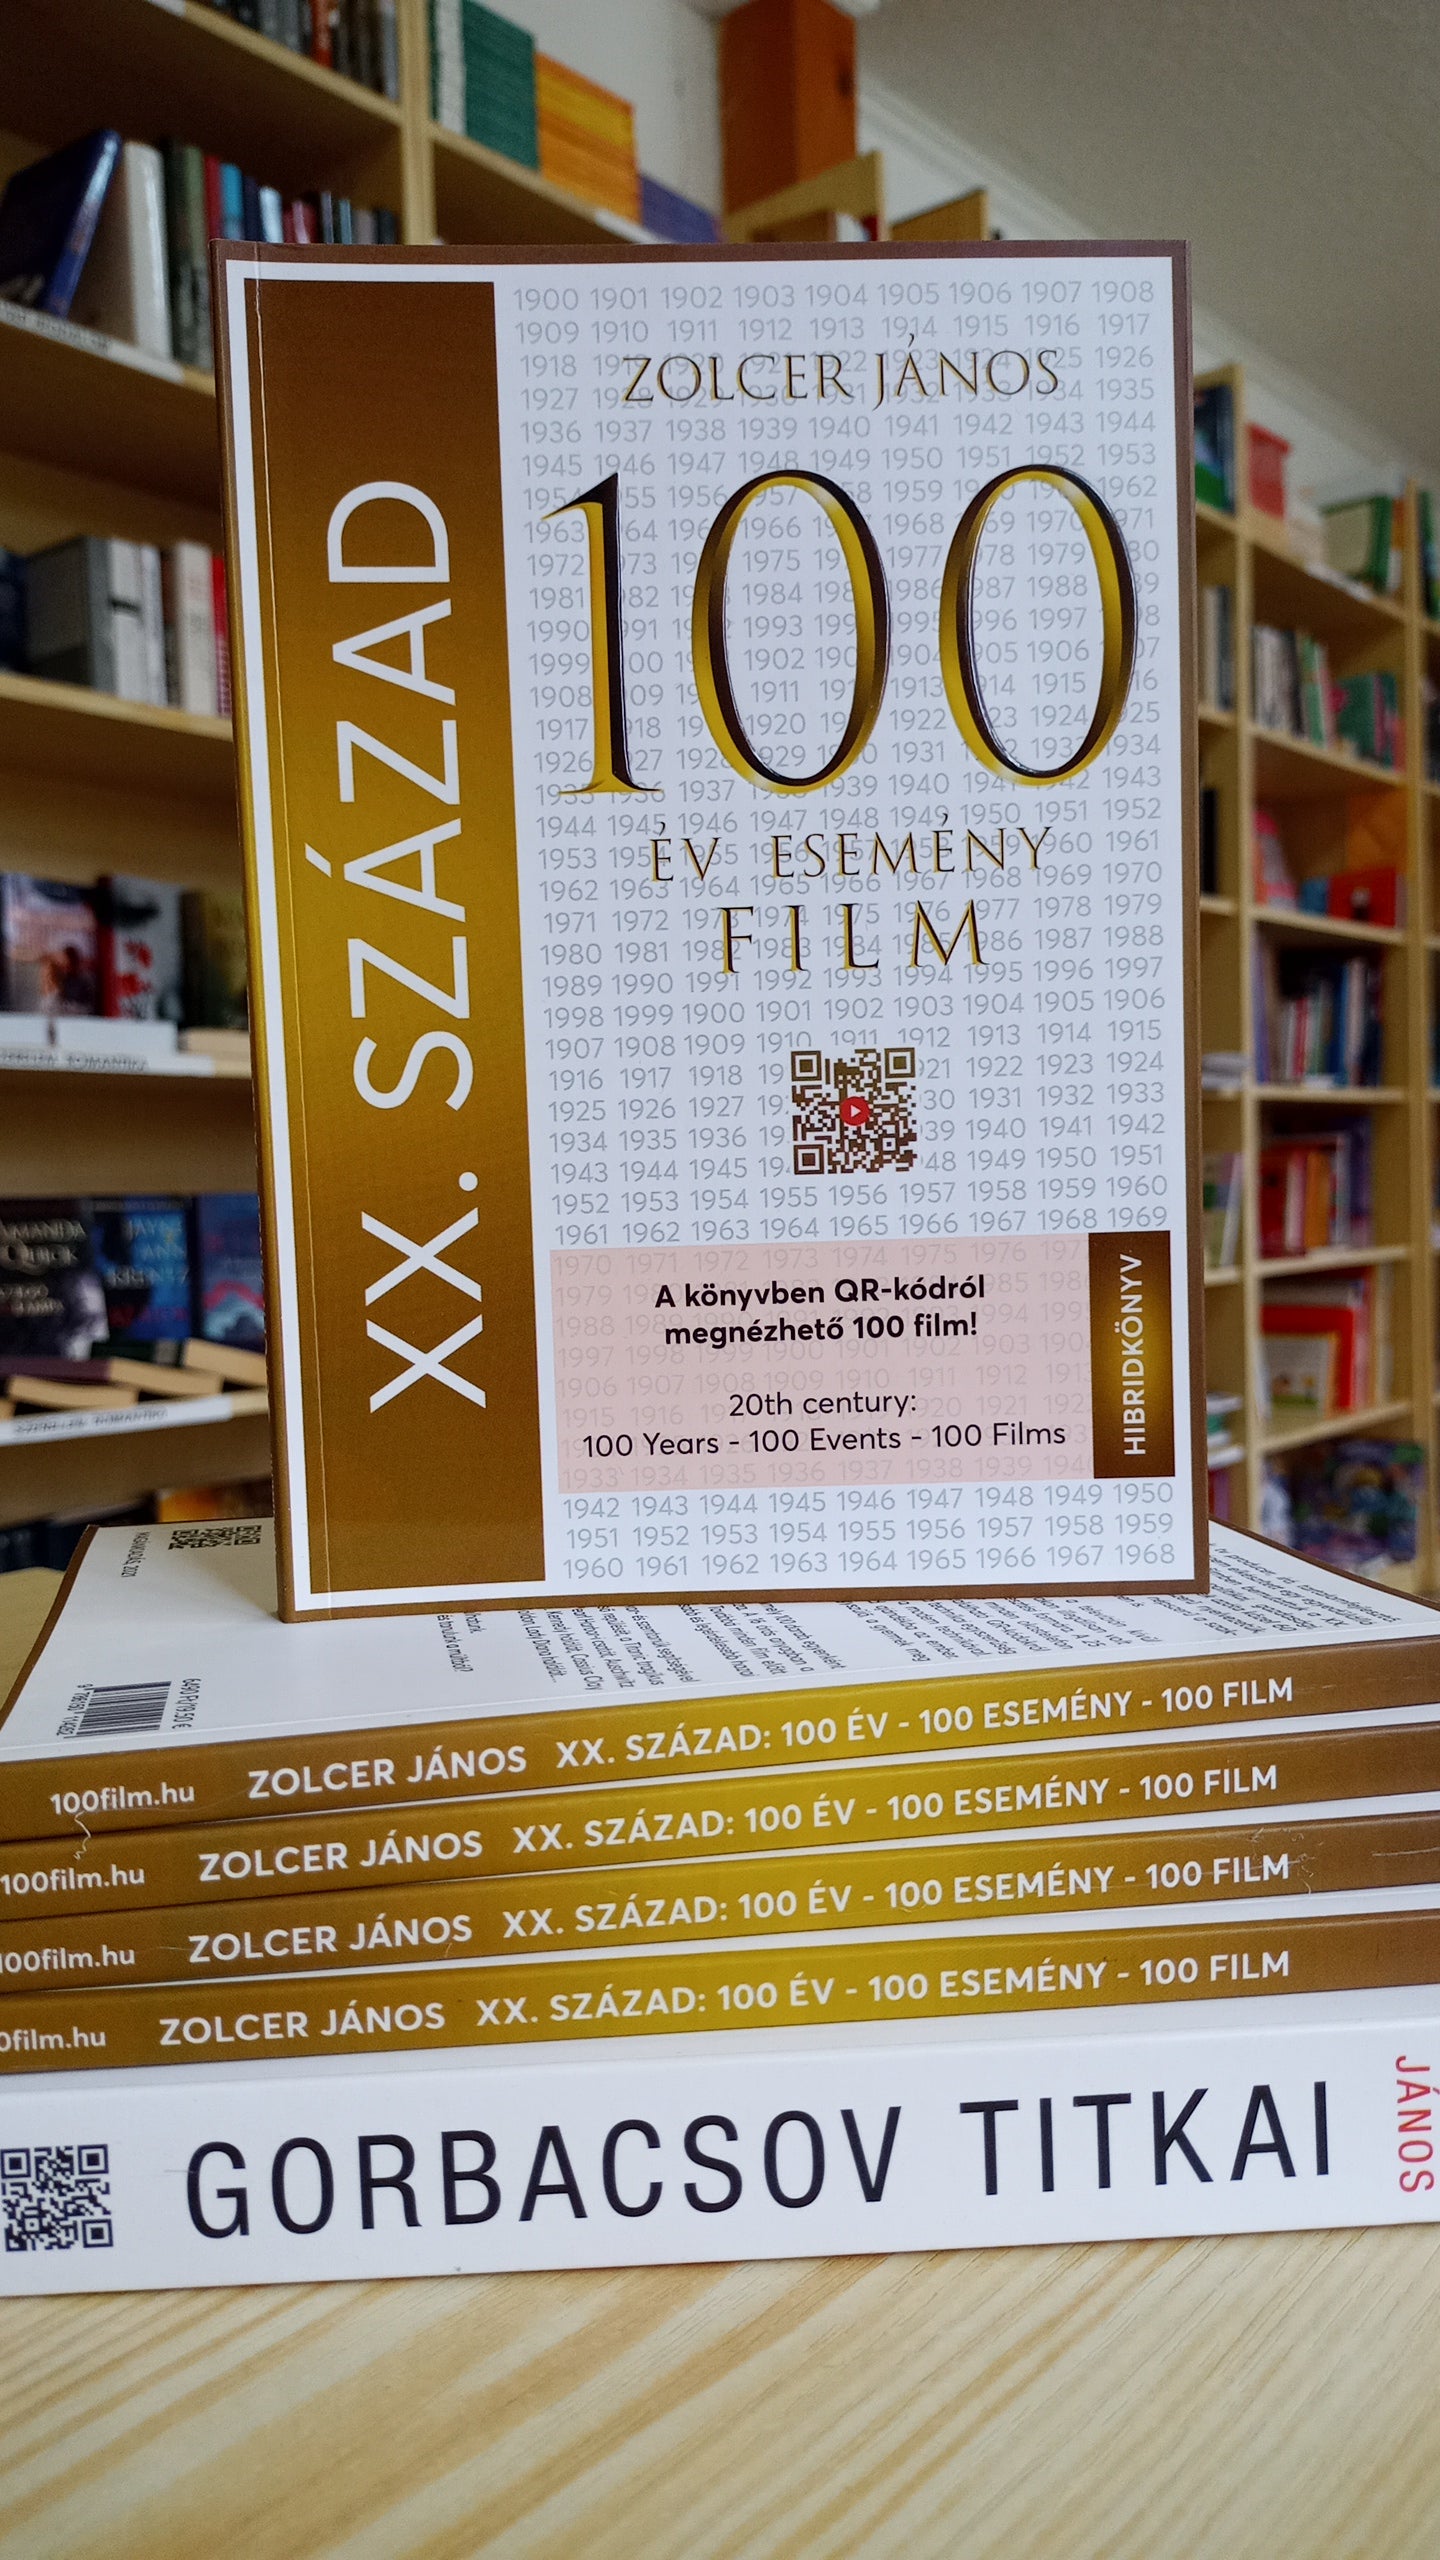 100 év - 100 esemény - 100 film